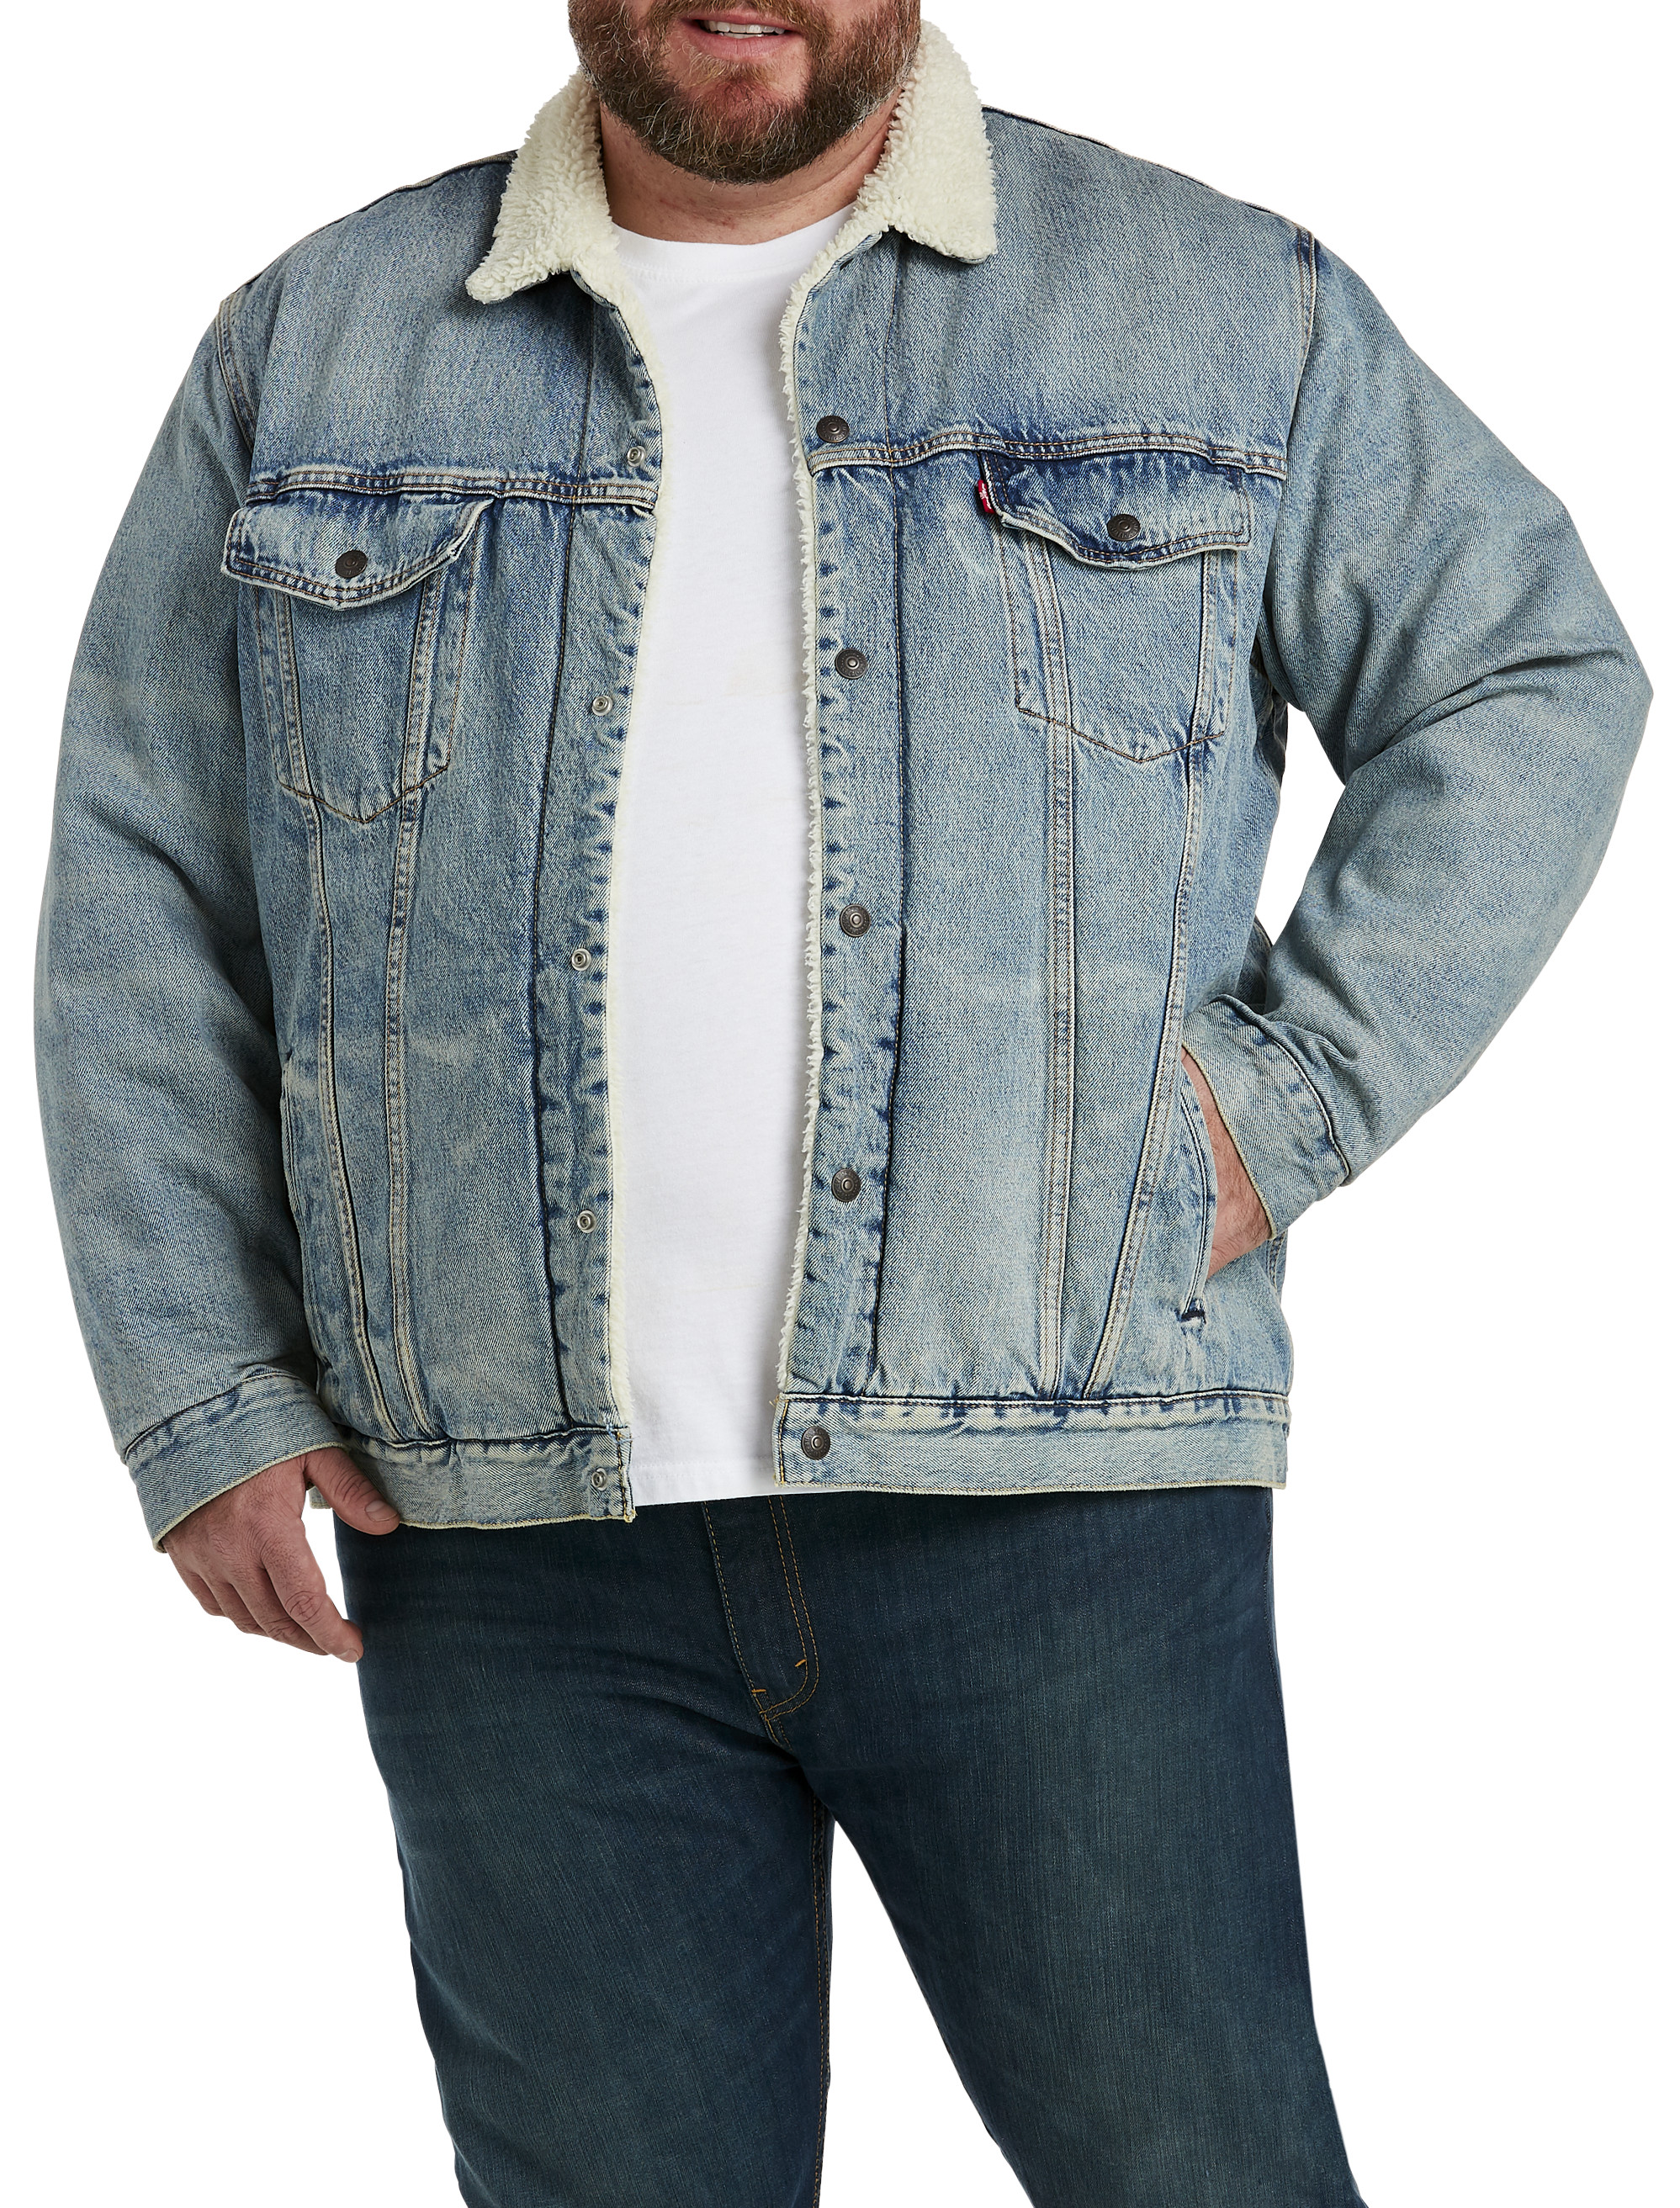 Men's Levi's baggy oversized denim trucker jacket in bleach wash